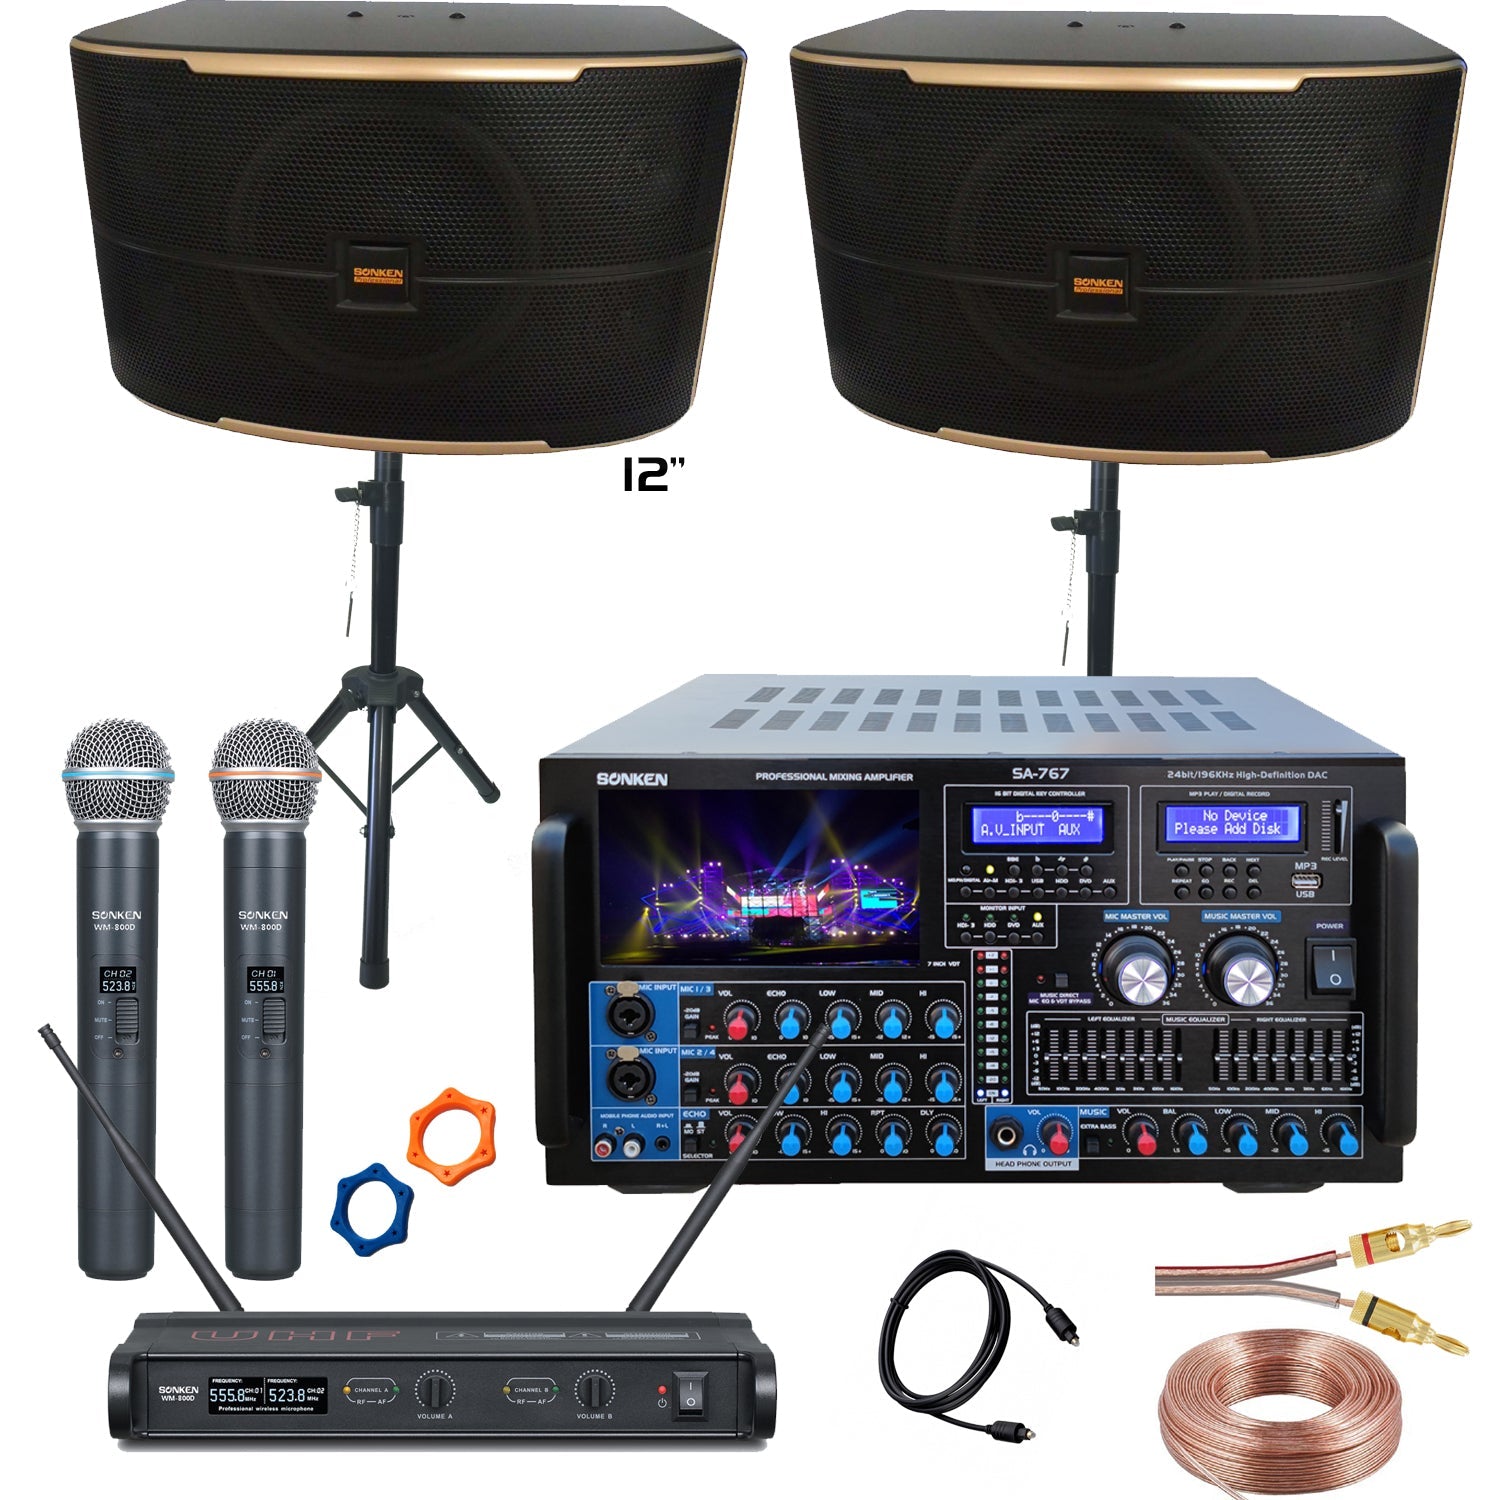 Amplifier and Speaker Package Deals